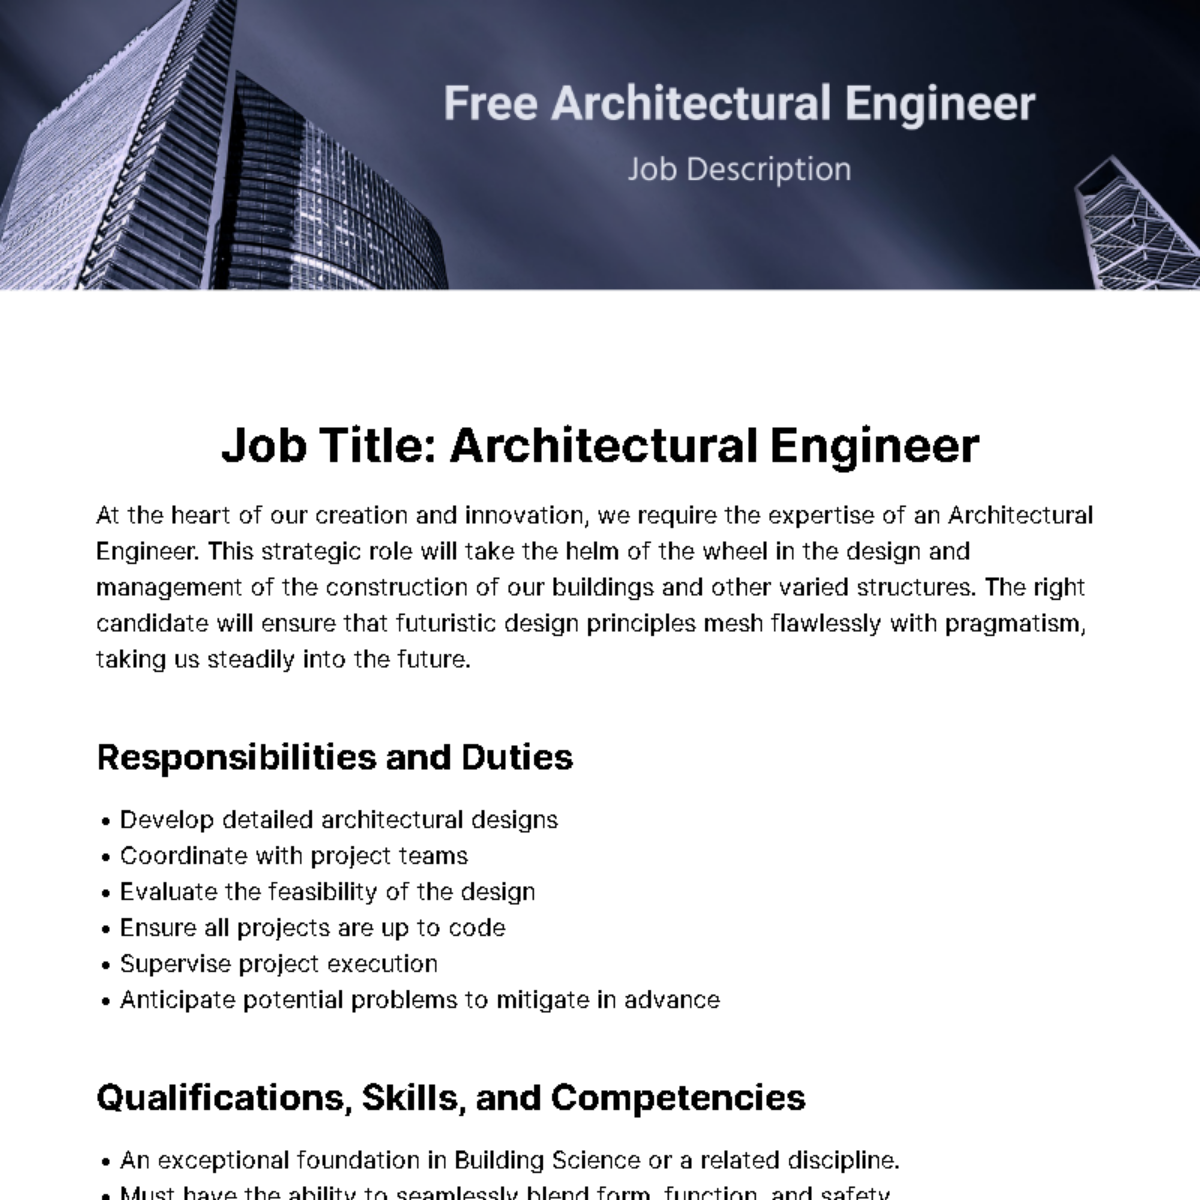 Free Architectural Engineer Job Description Template